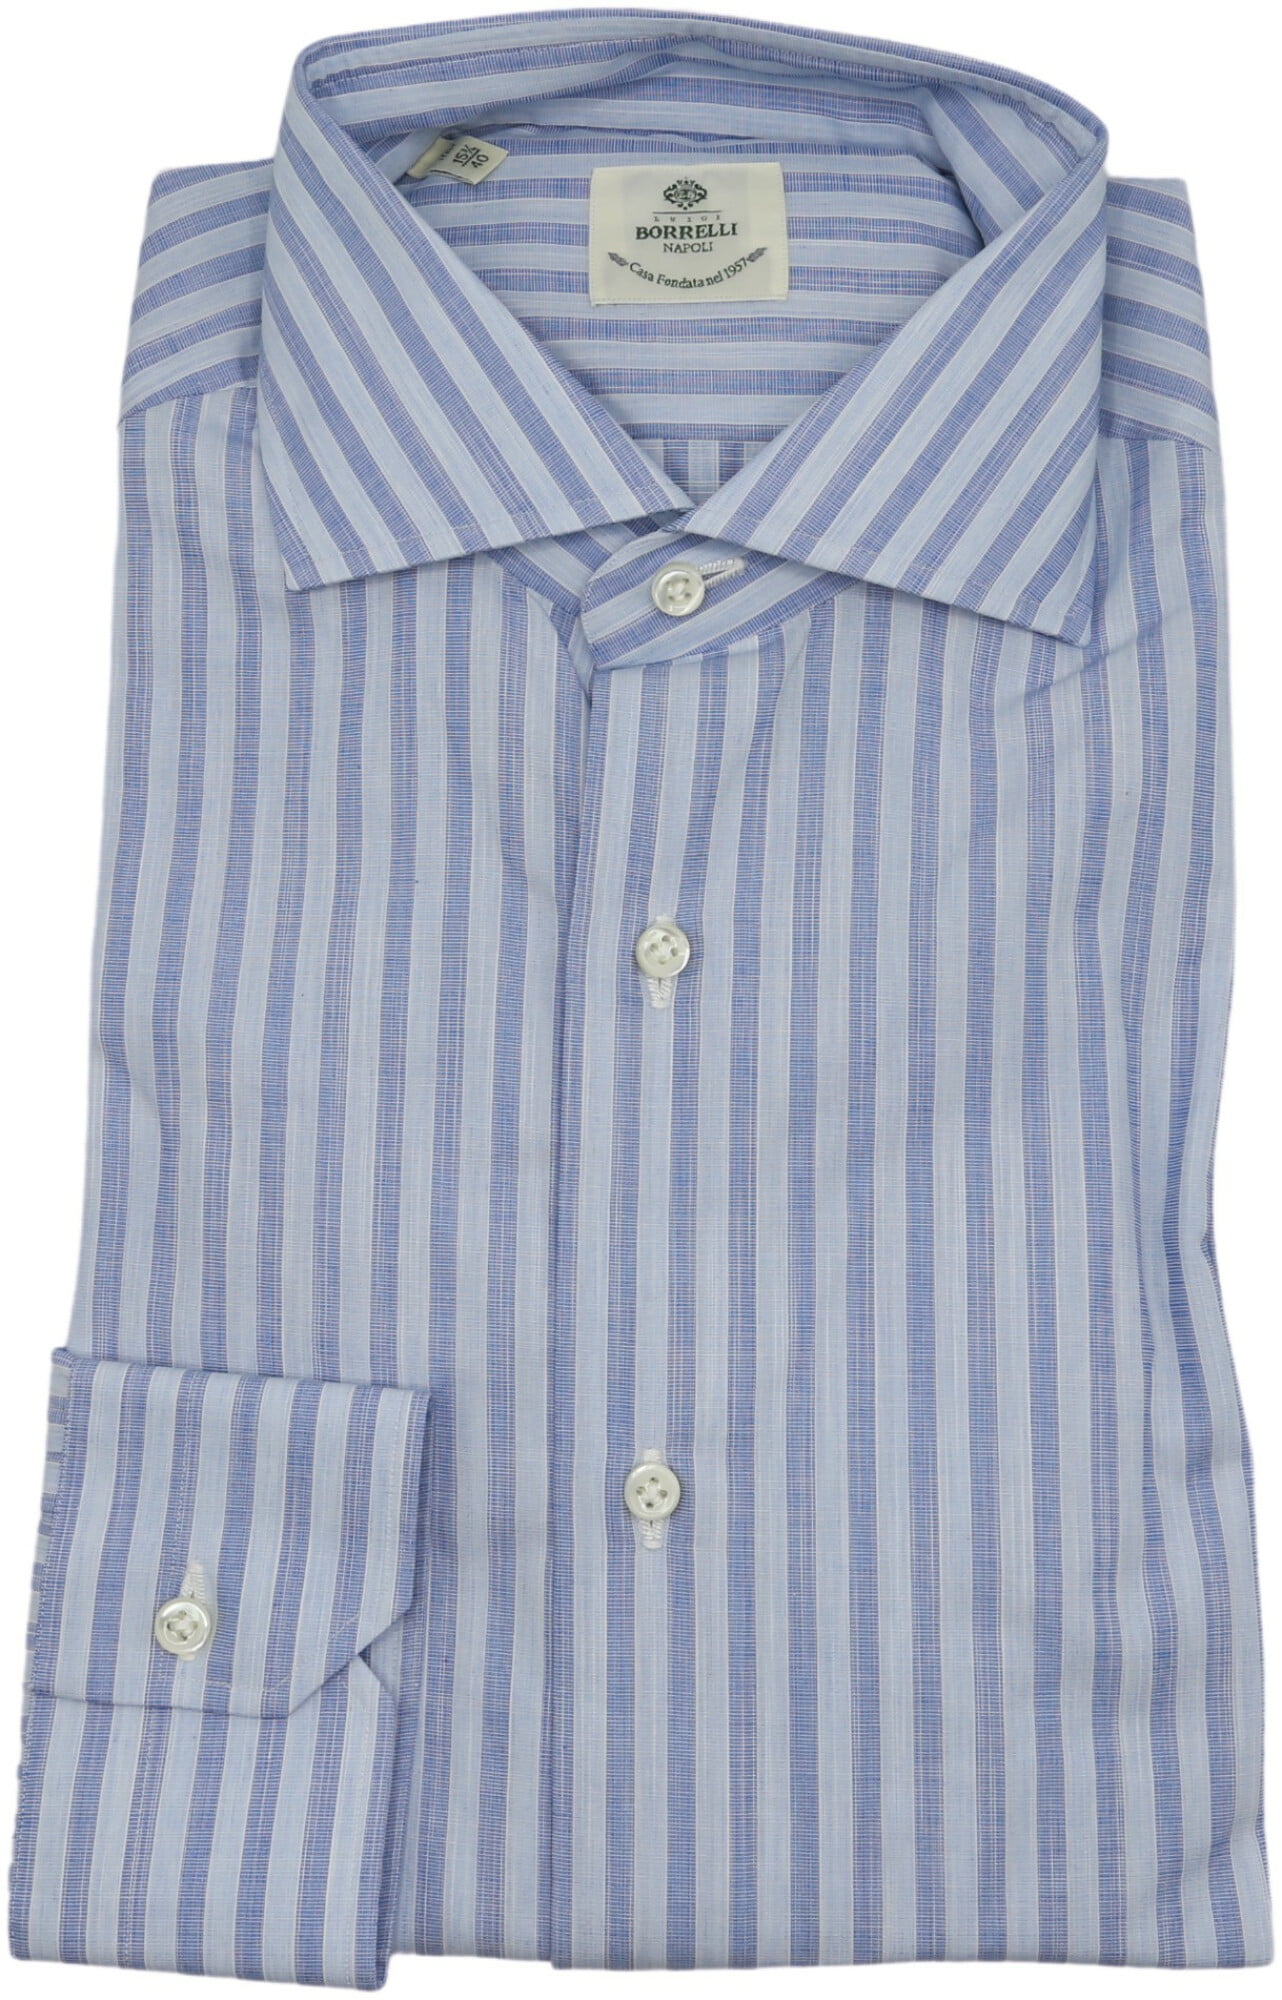 Luigi Borrelli Brown Plaid Button-Down Collar Cotton Slim Fit Dress Shirt Size Medium 15.5